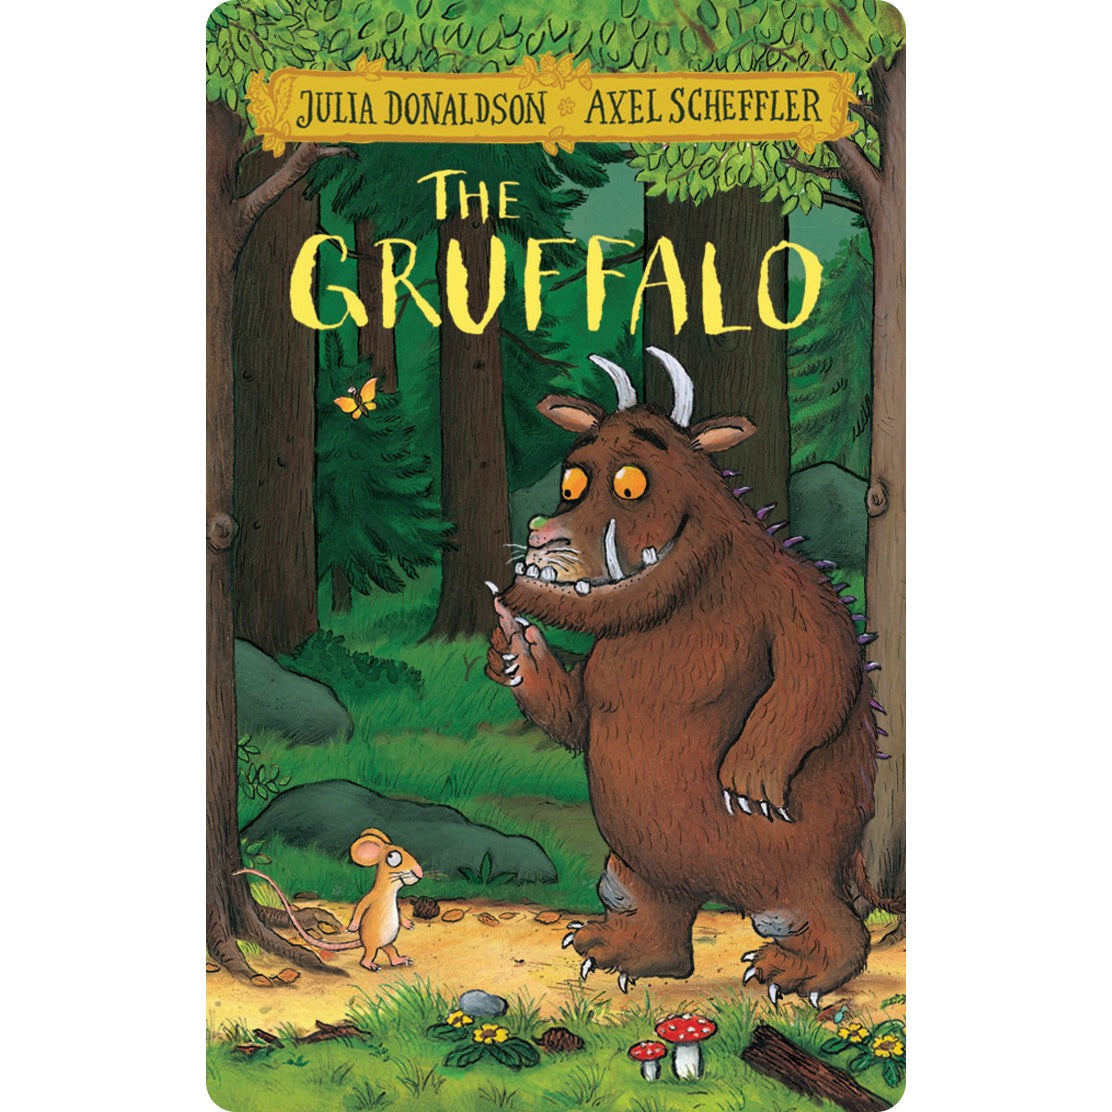 Yoto Card - The Gruffalo - Julia Donaldson - Child Friendly Audio Story Card for the Yoto Player